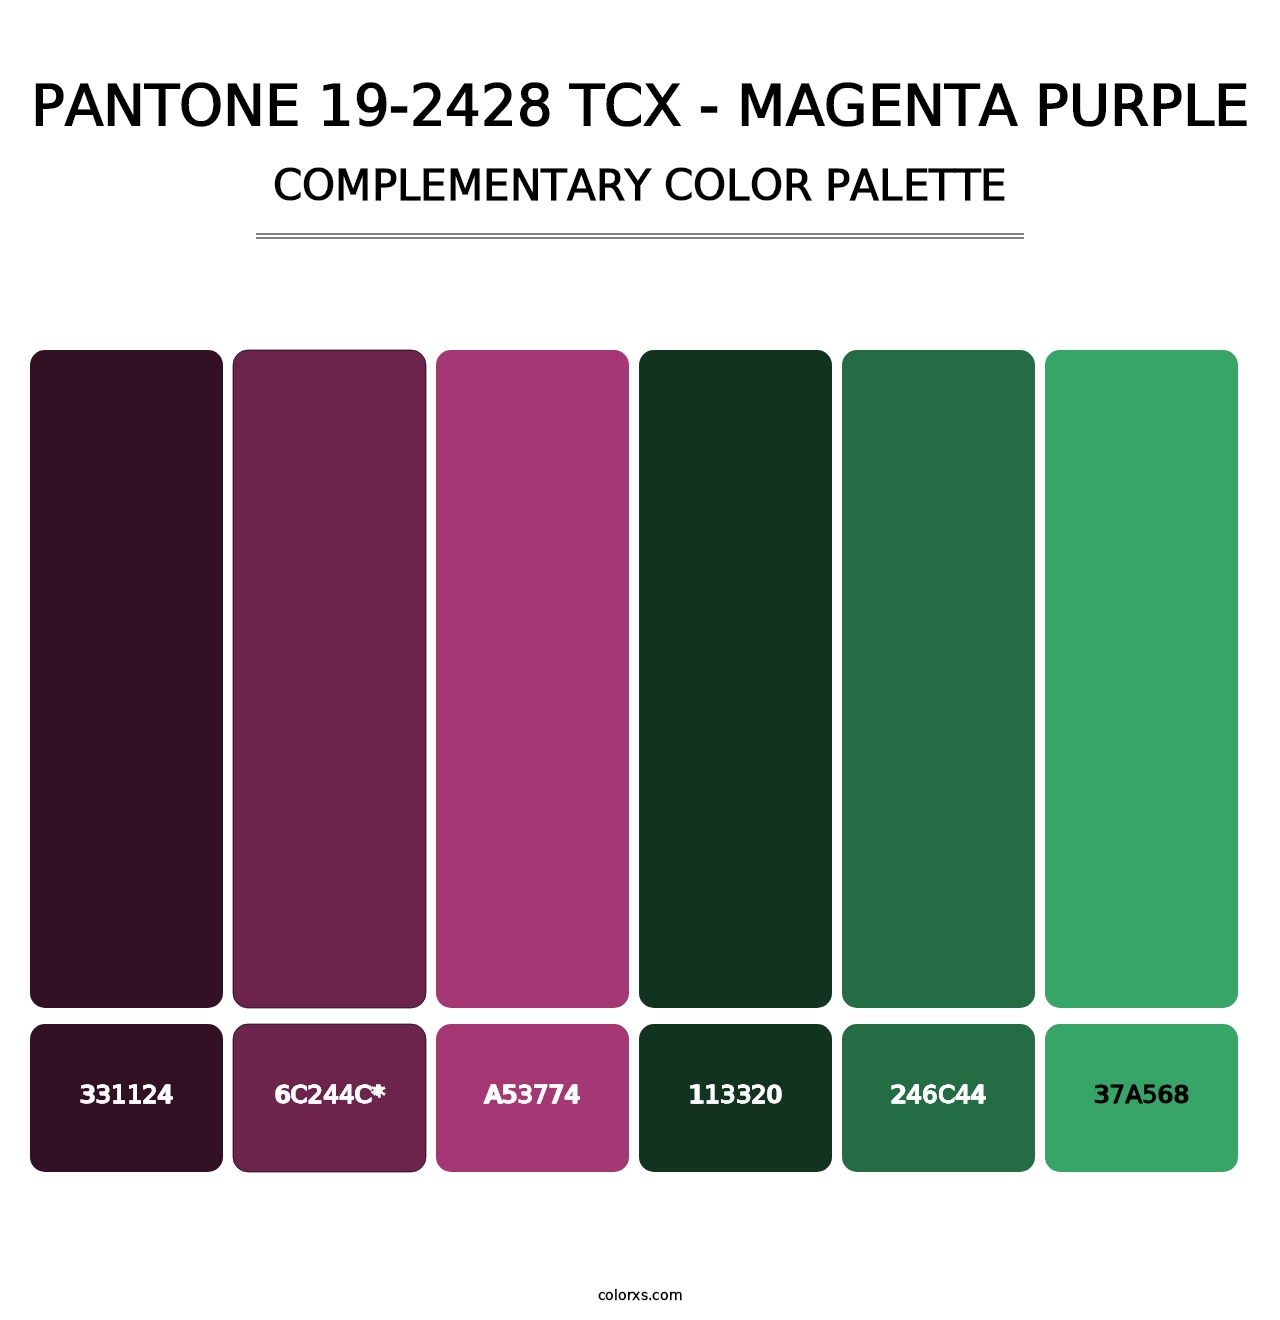 PANTONE 19-2428 TCX - Magenta Purple - Complementary Color Palette